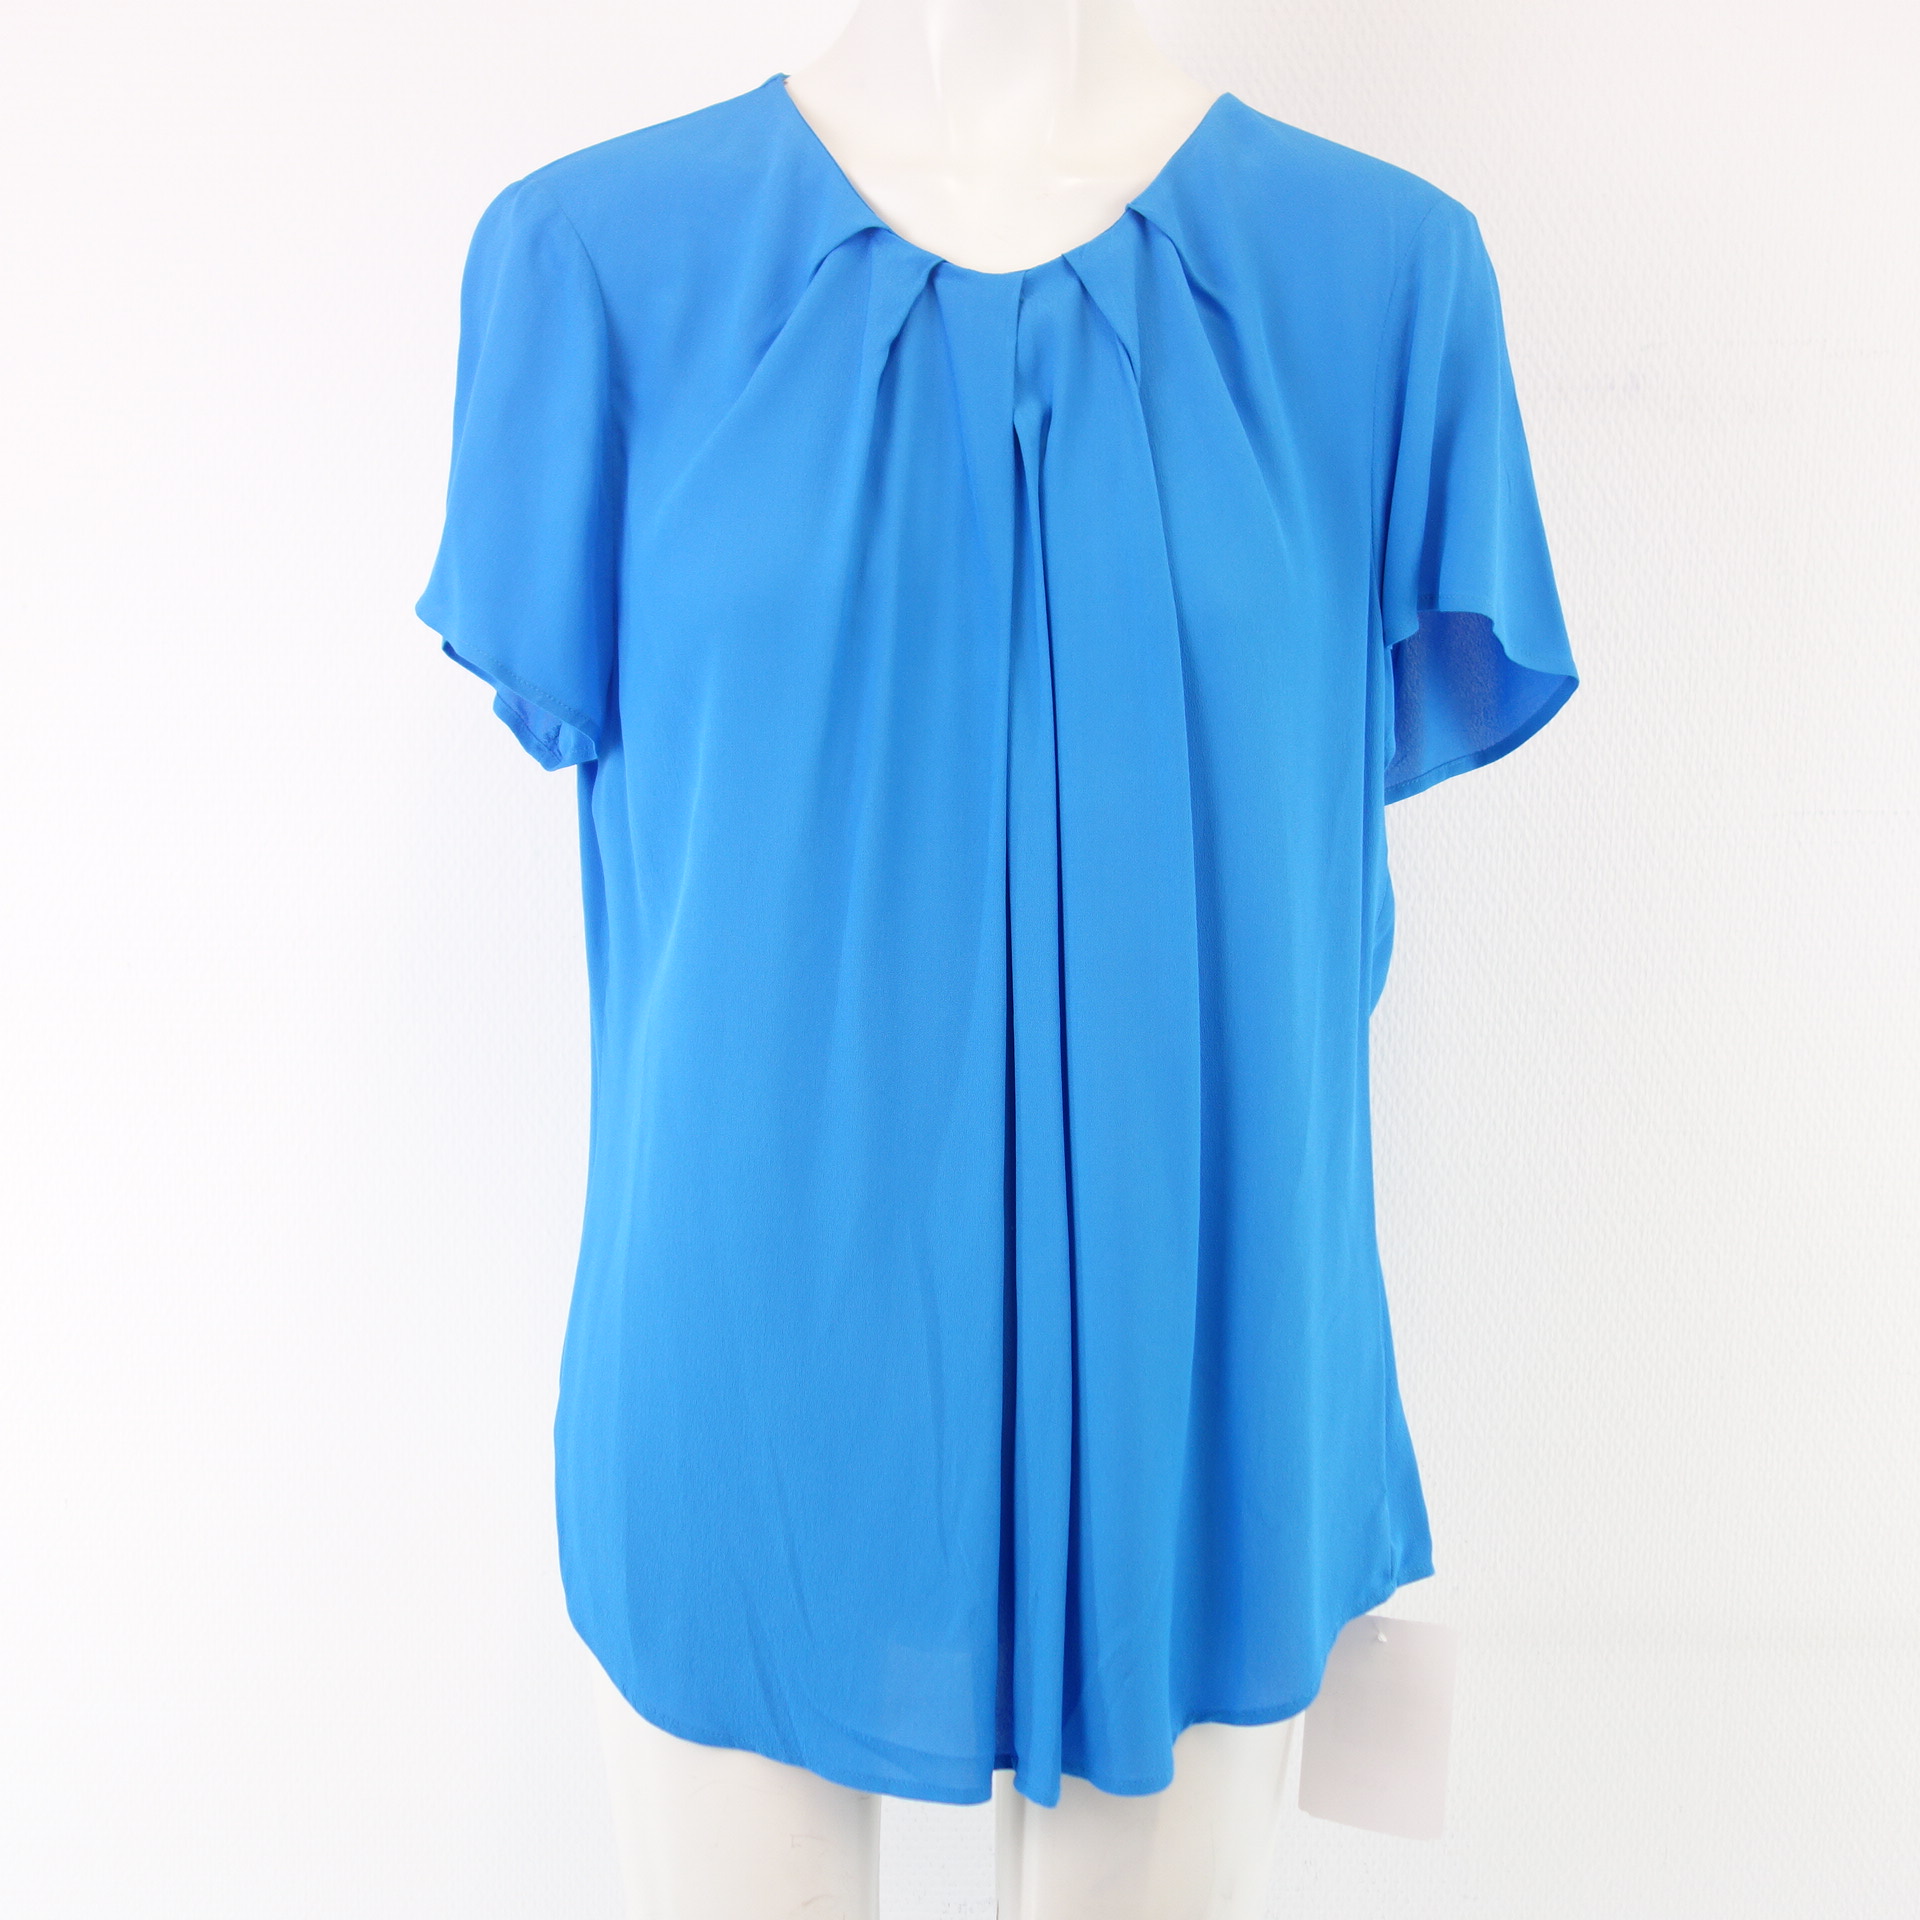 SEIDENSTICKER Damen Sommer Bluse Shirt Tunika Top Blau 100% Viskose 